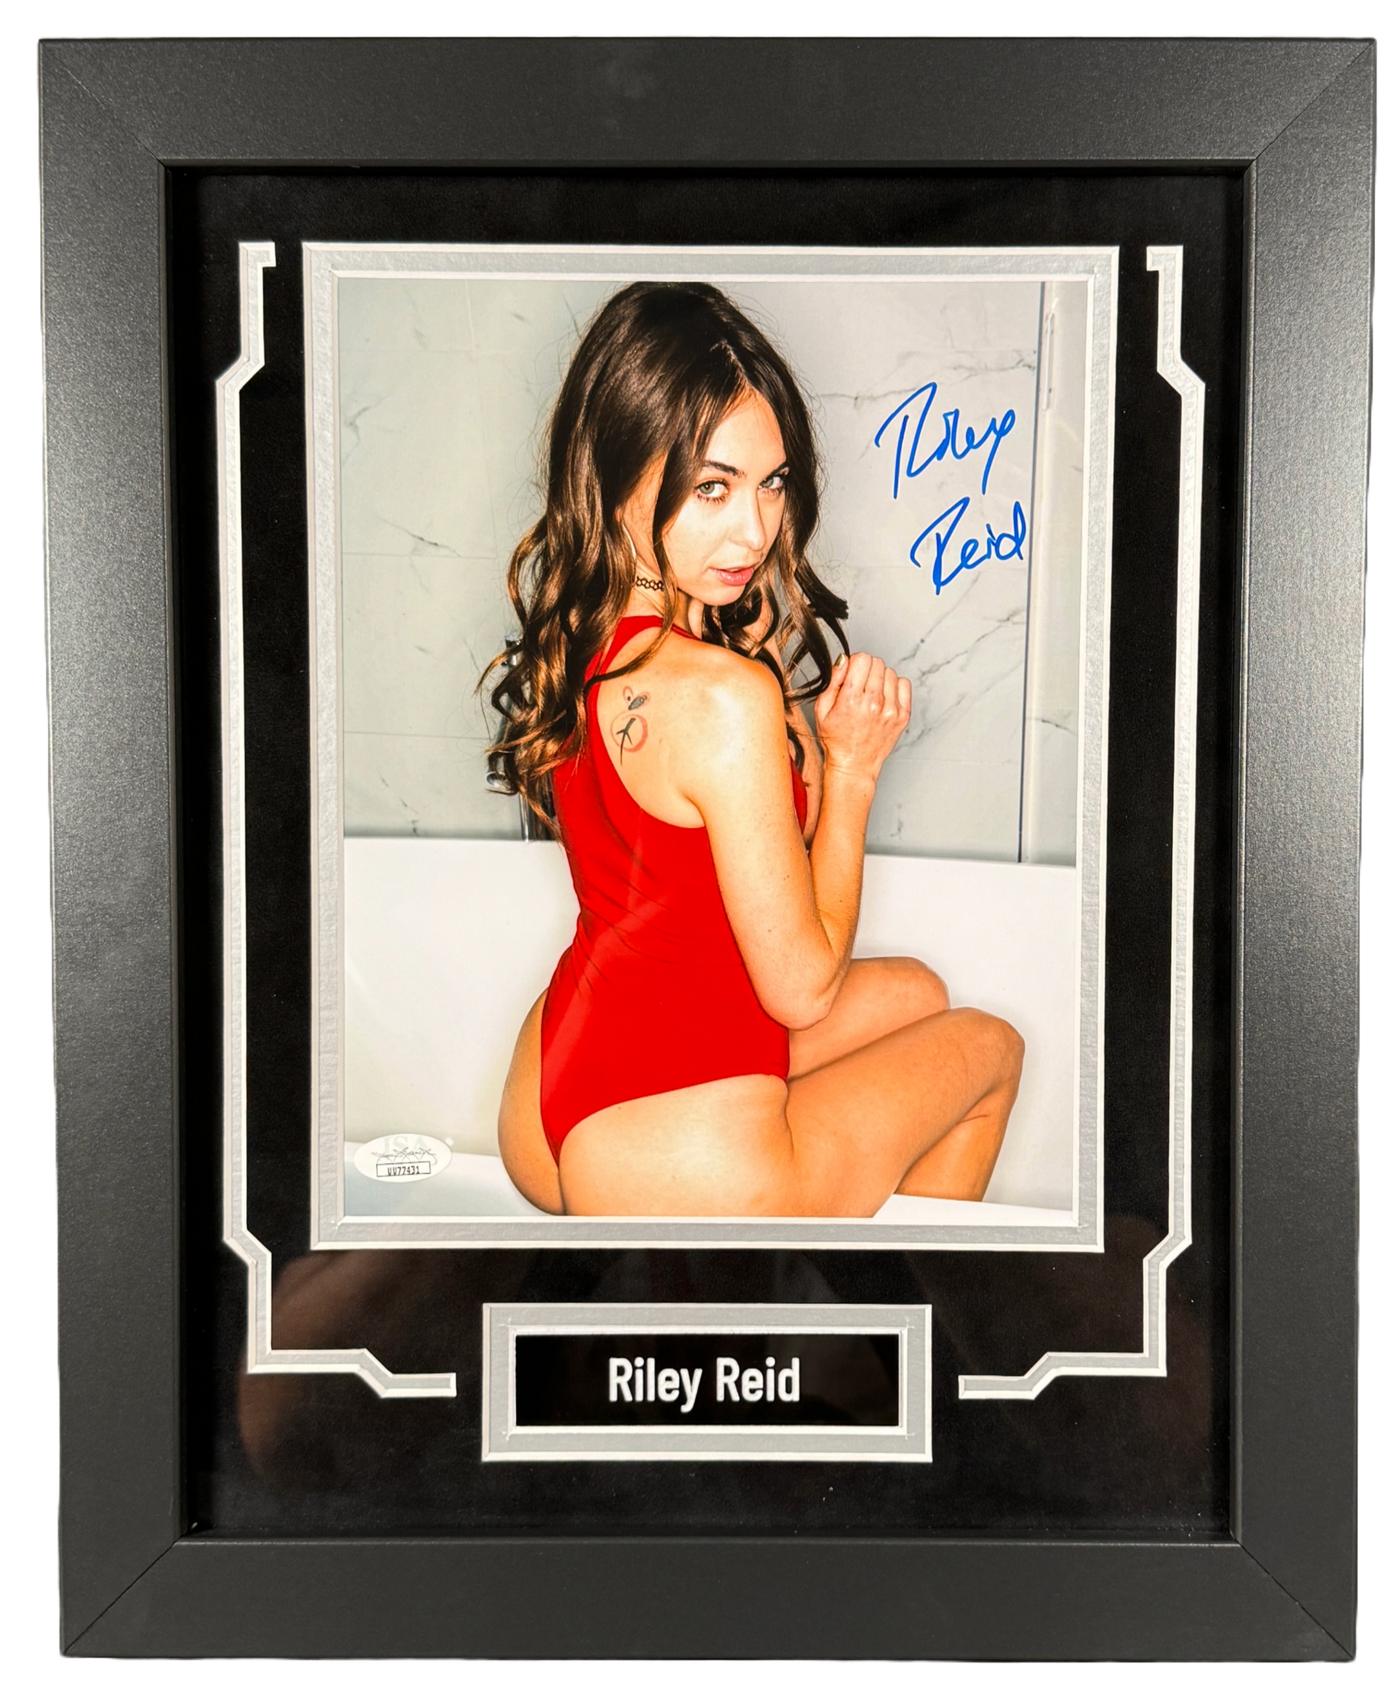 Riley Reid Signed & Custom Framed 8x10 Photo Authentic Autographed JSA COA